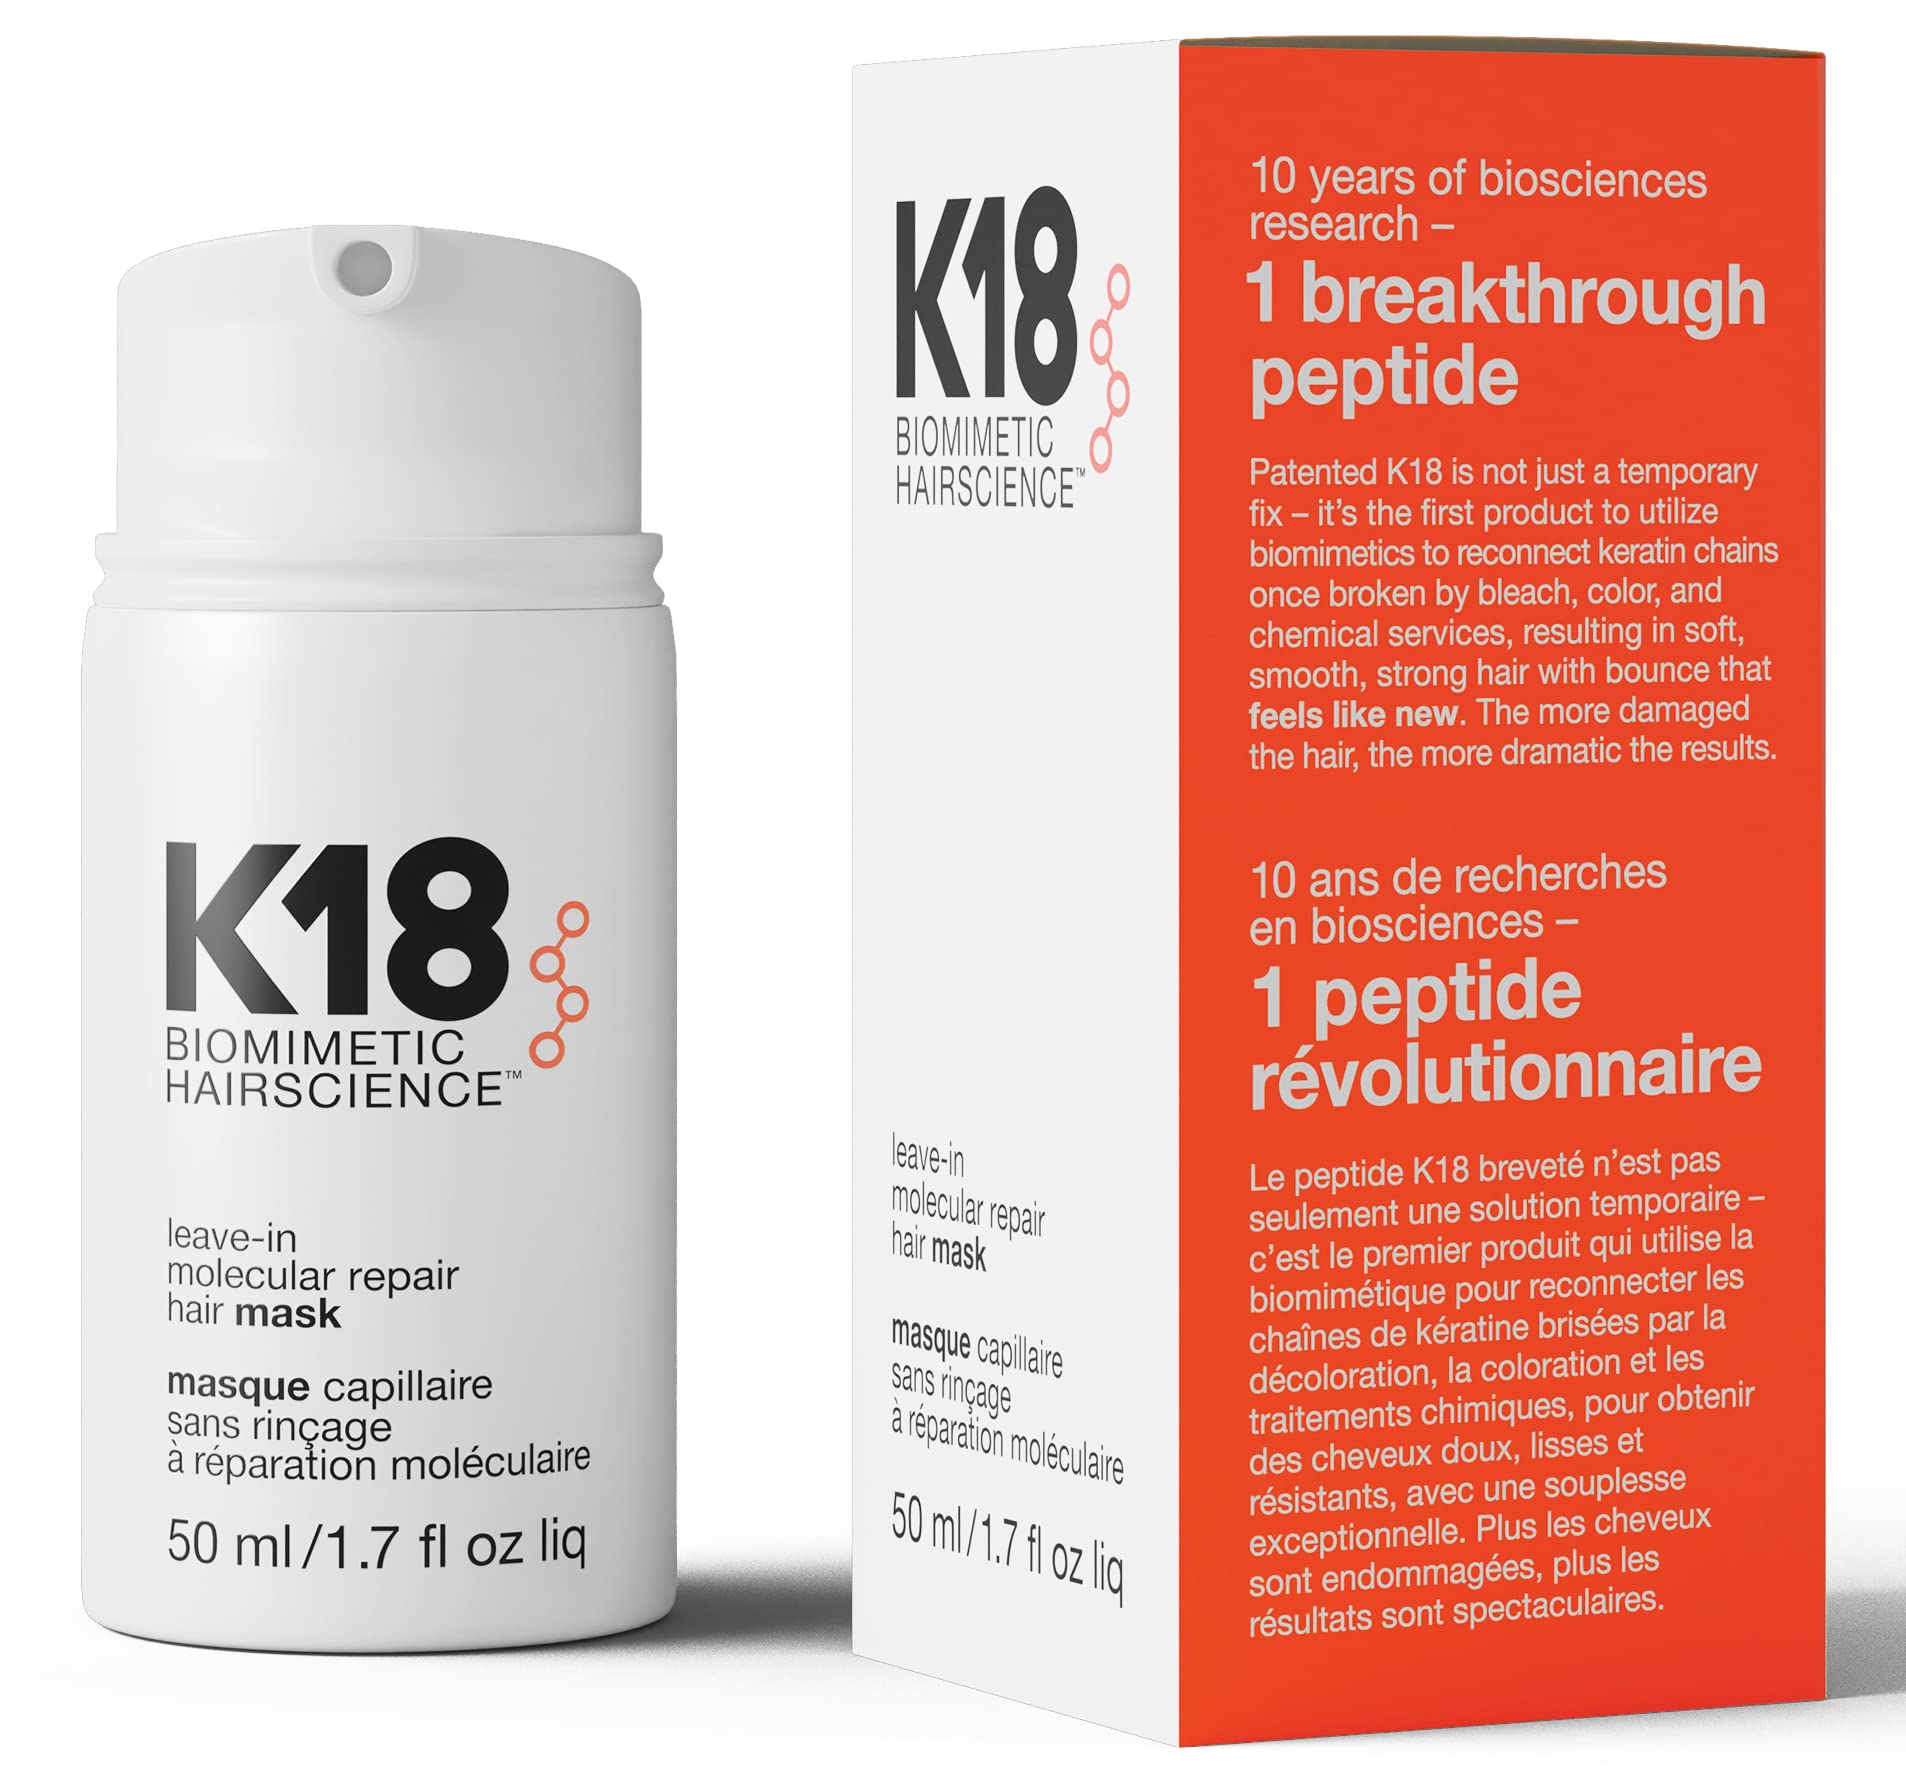 K18 免洗修复发膜护理可修复干燥或受损的头发 - 4 分钟即可逆转漂白剂、染发剂、化学服务和热造成的头发损伤，50 毫升